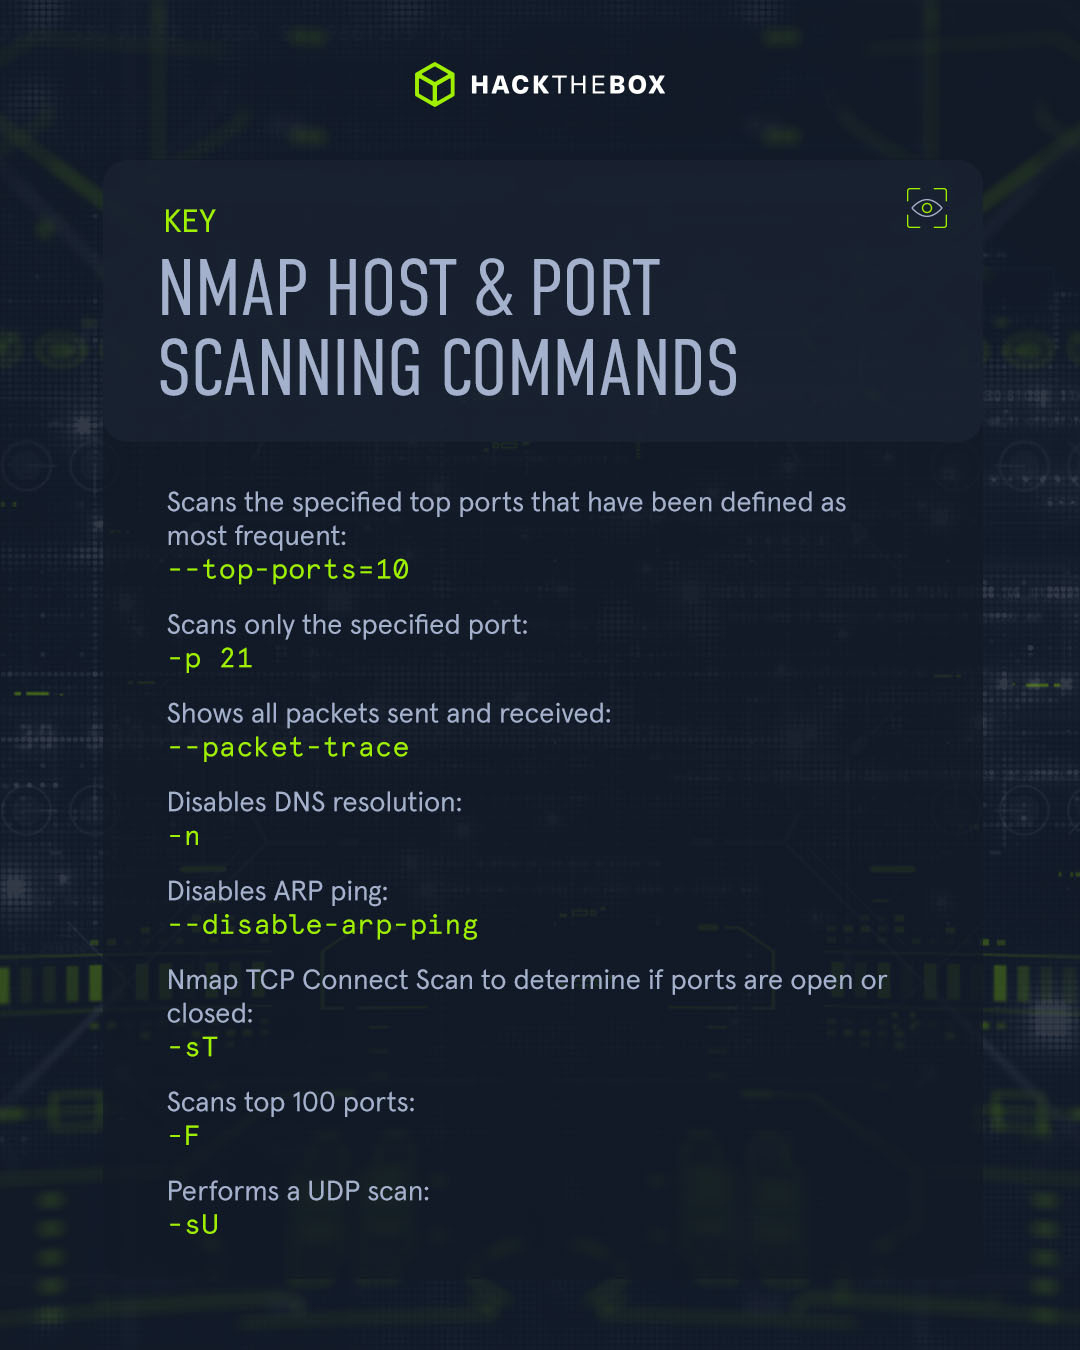 Nmap host and port scanning commands